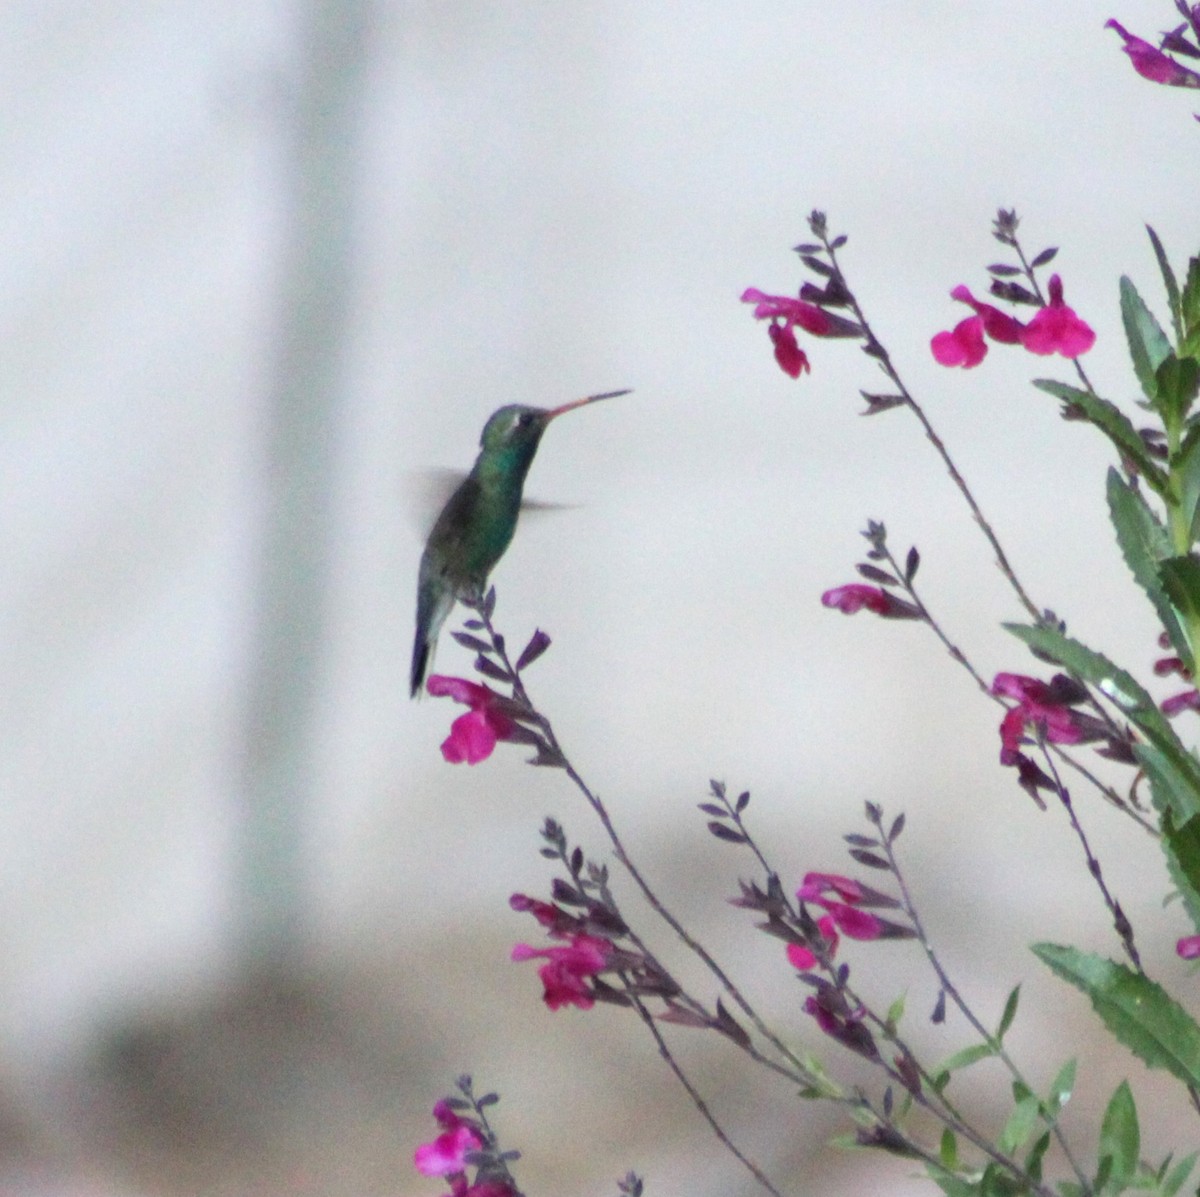 Broad-billed Hummingbird - Marsha Painter